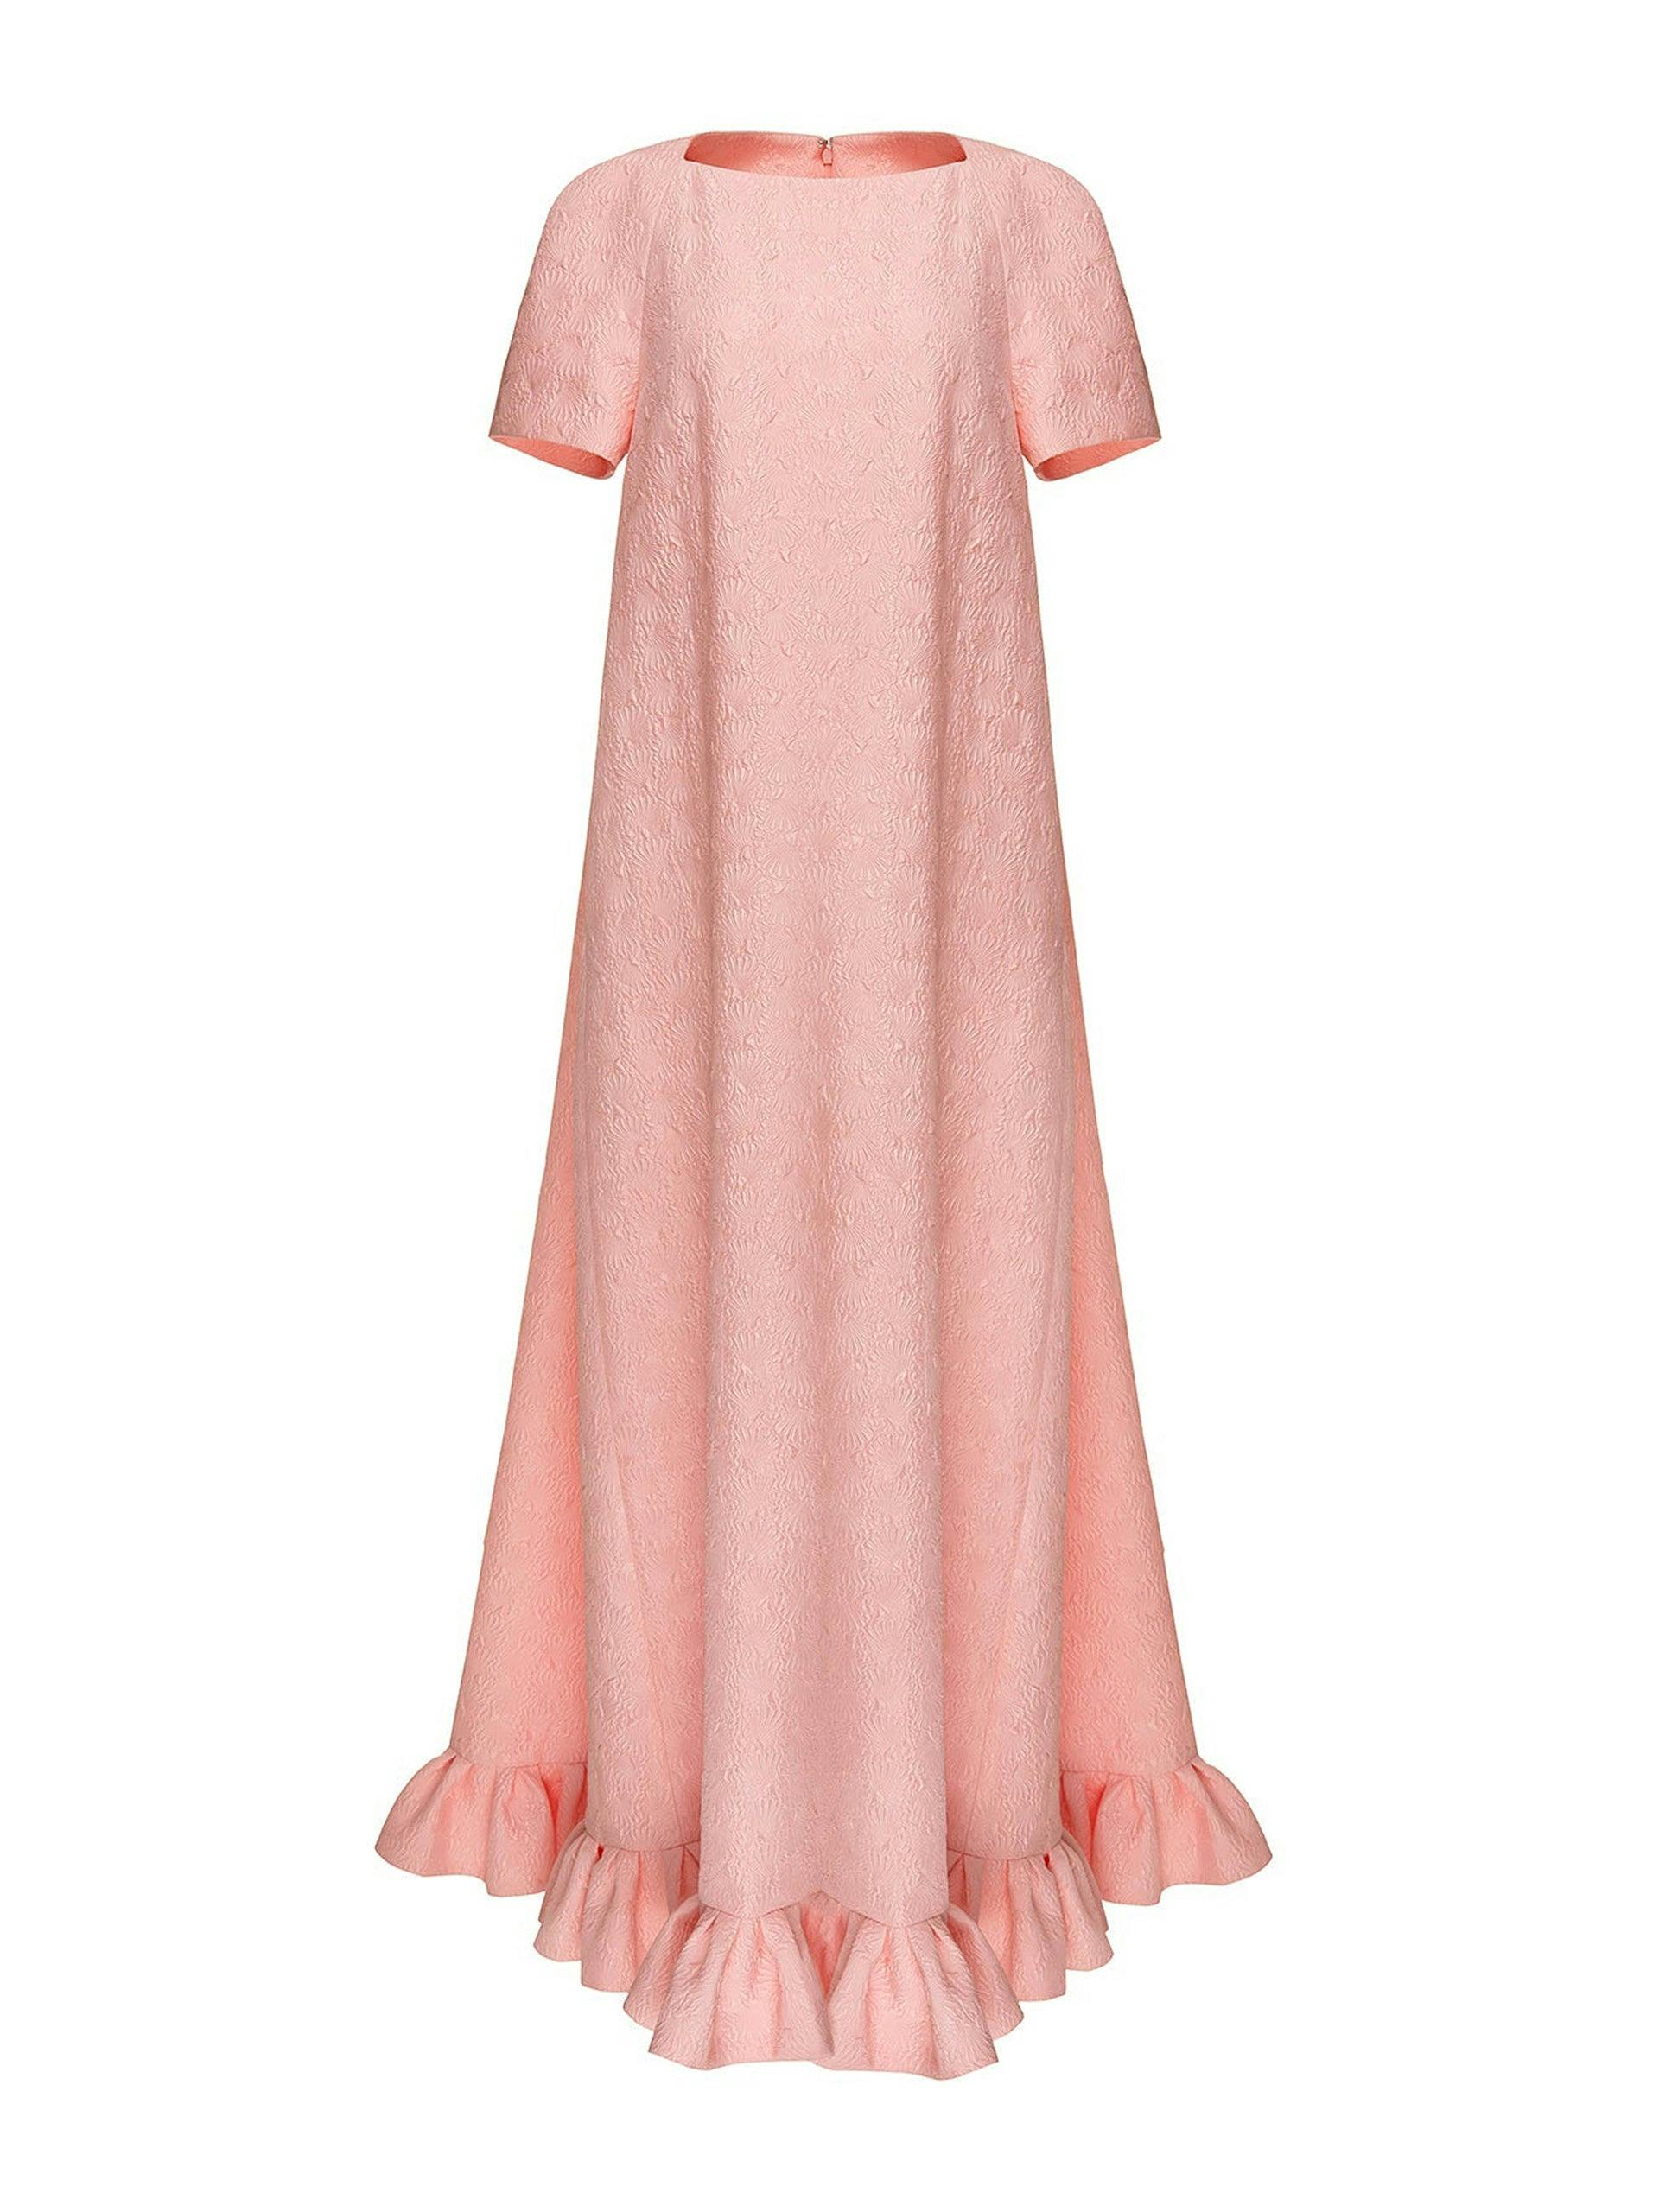 Nadia pink quartz jacquard dress